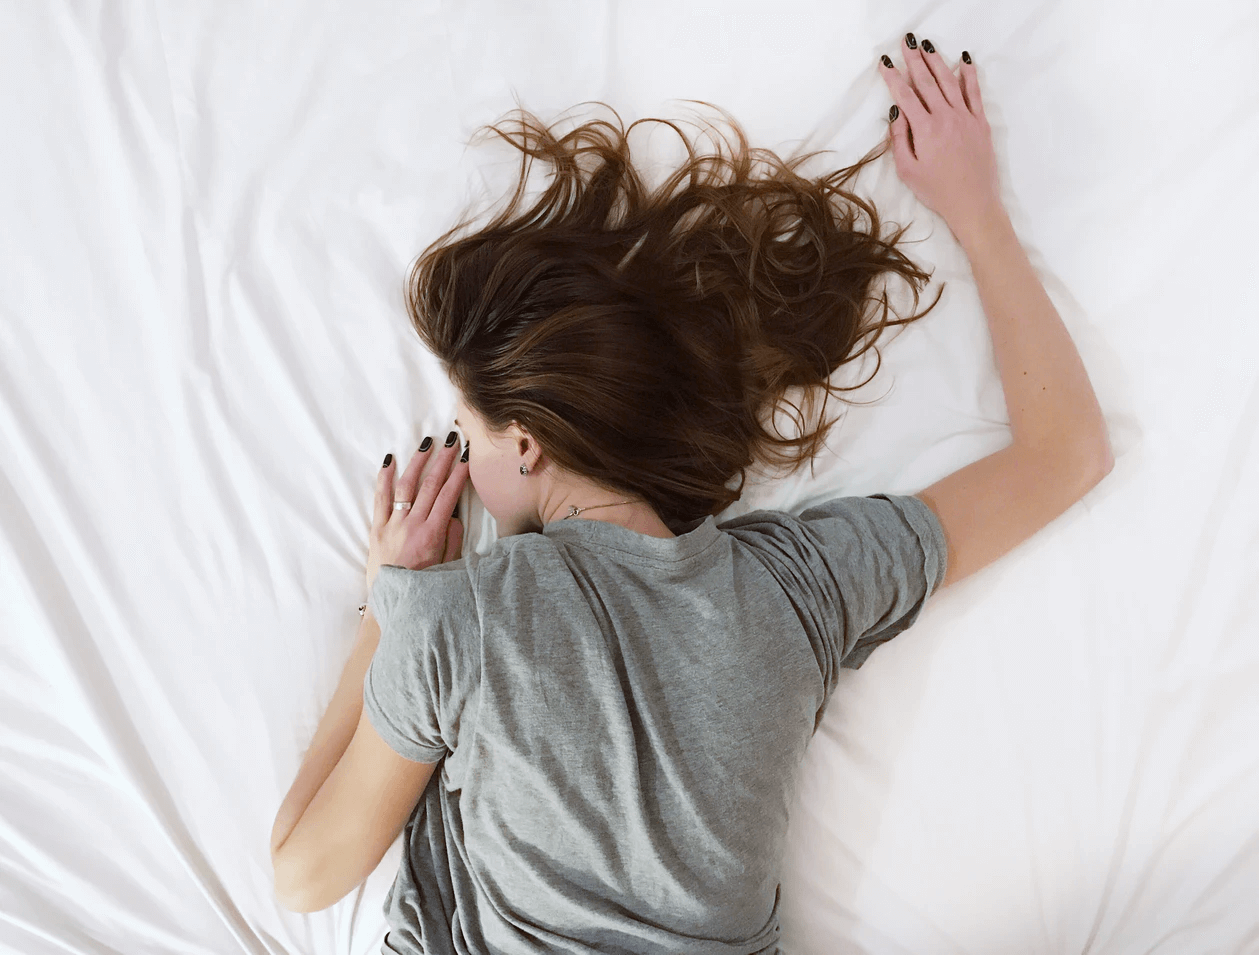 6 TIPS ON HAVING STRESS-FREE AND JOYFUL MORNING